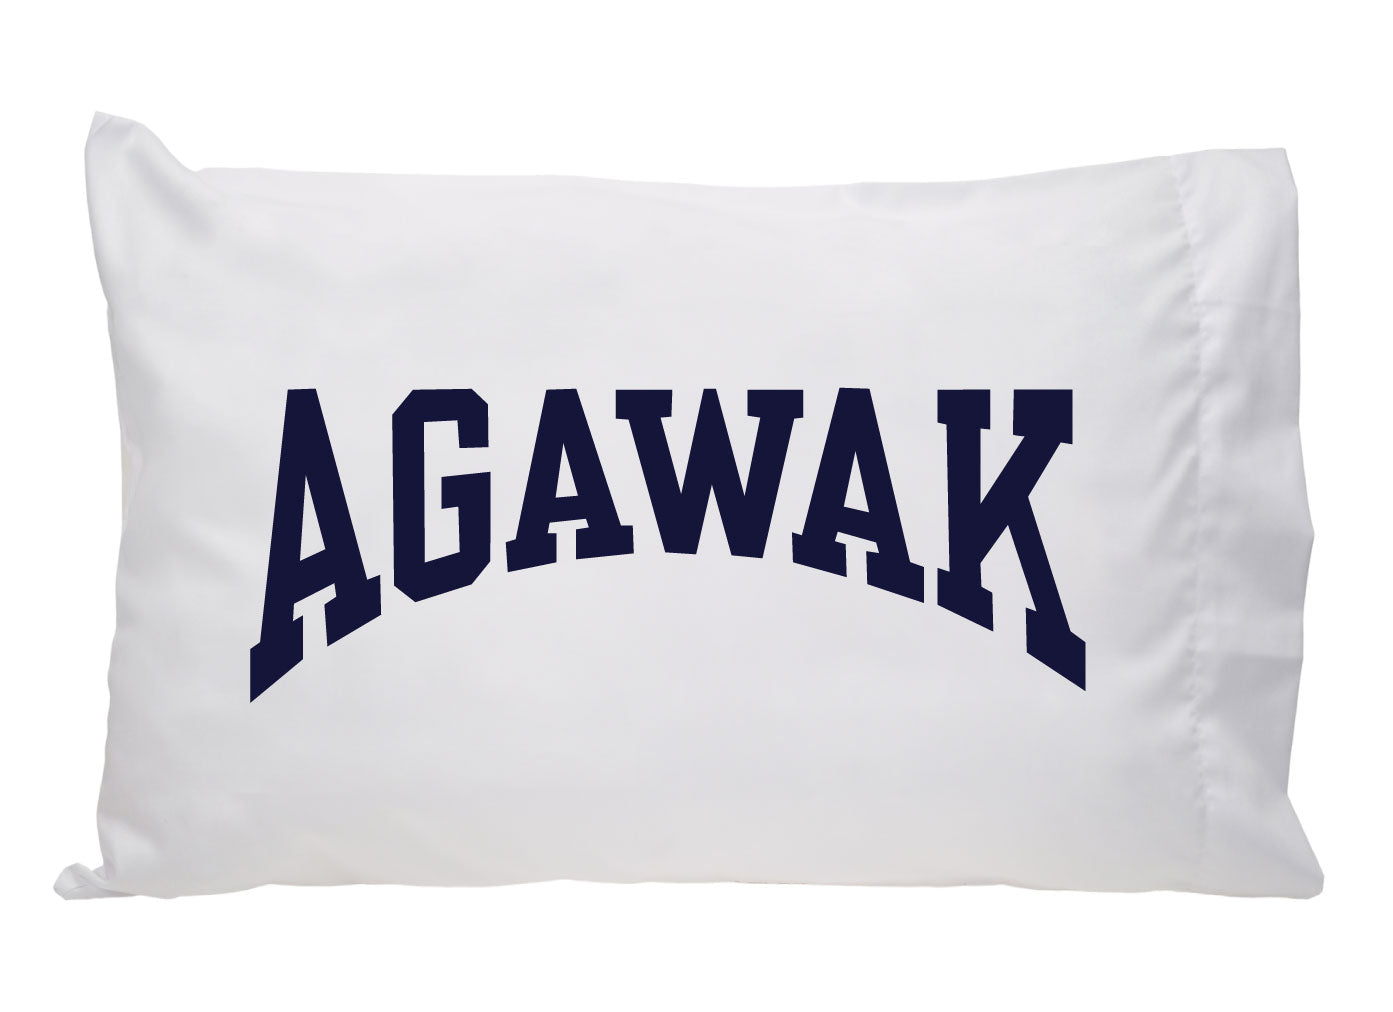 Camp Agawak Autographable Pillow Case